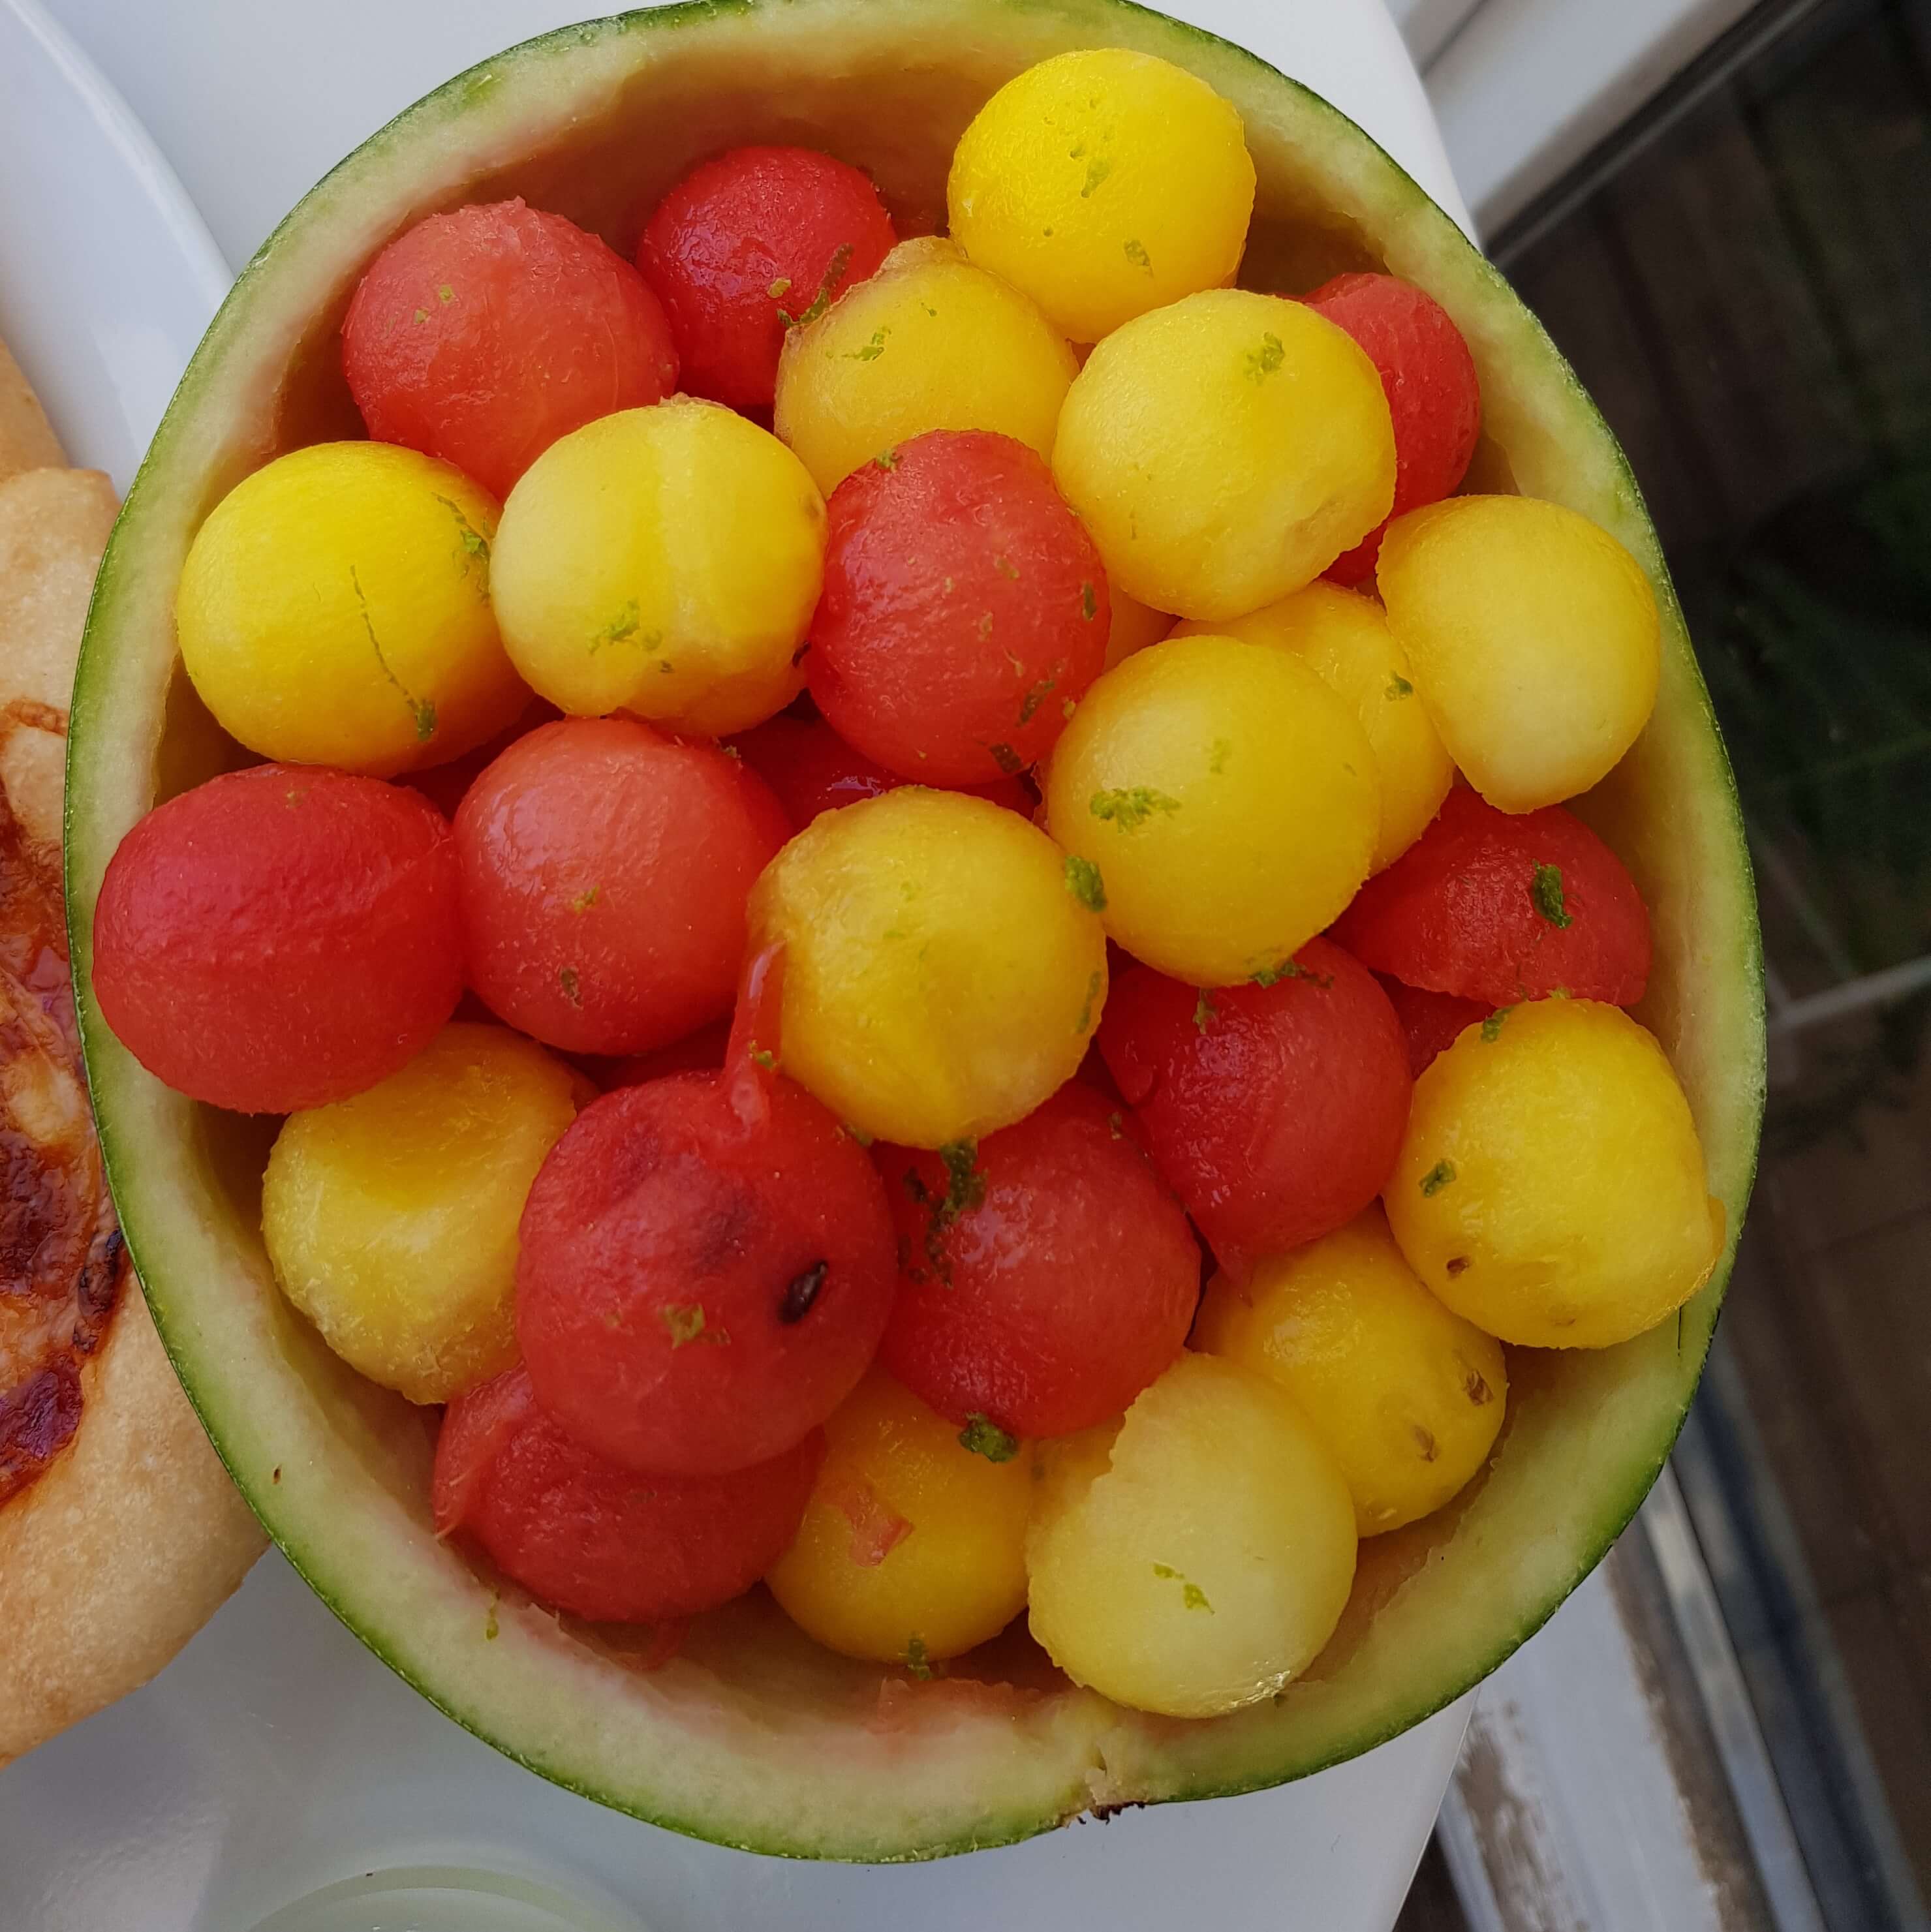 Watermelon balls salad in a watermelon bowl